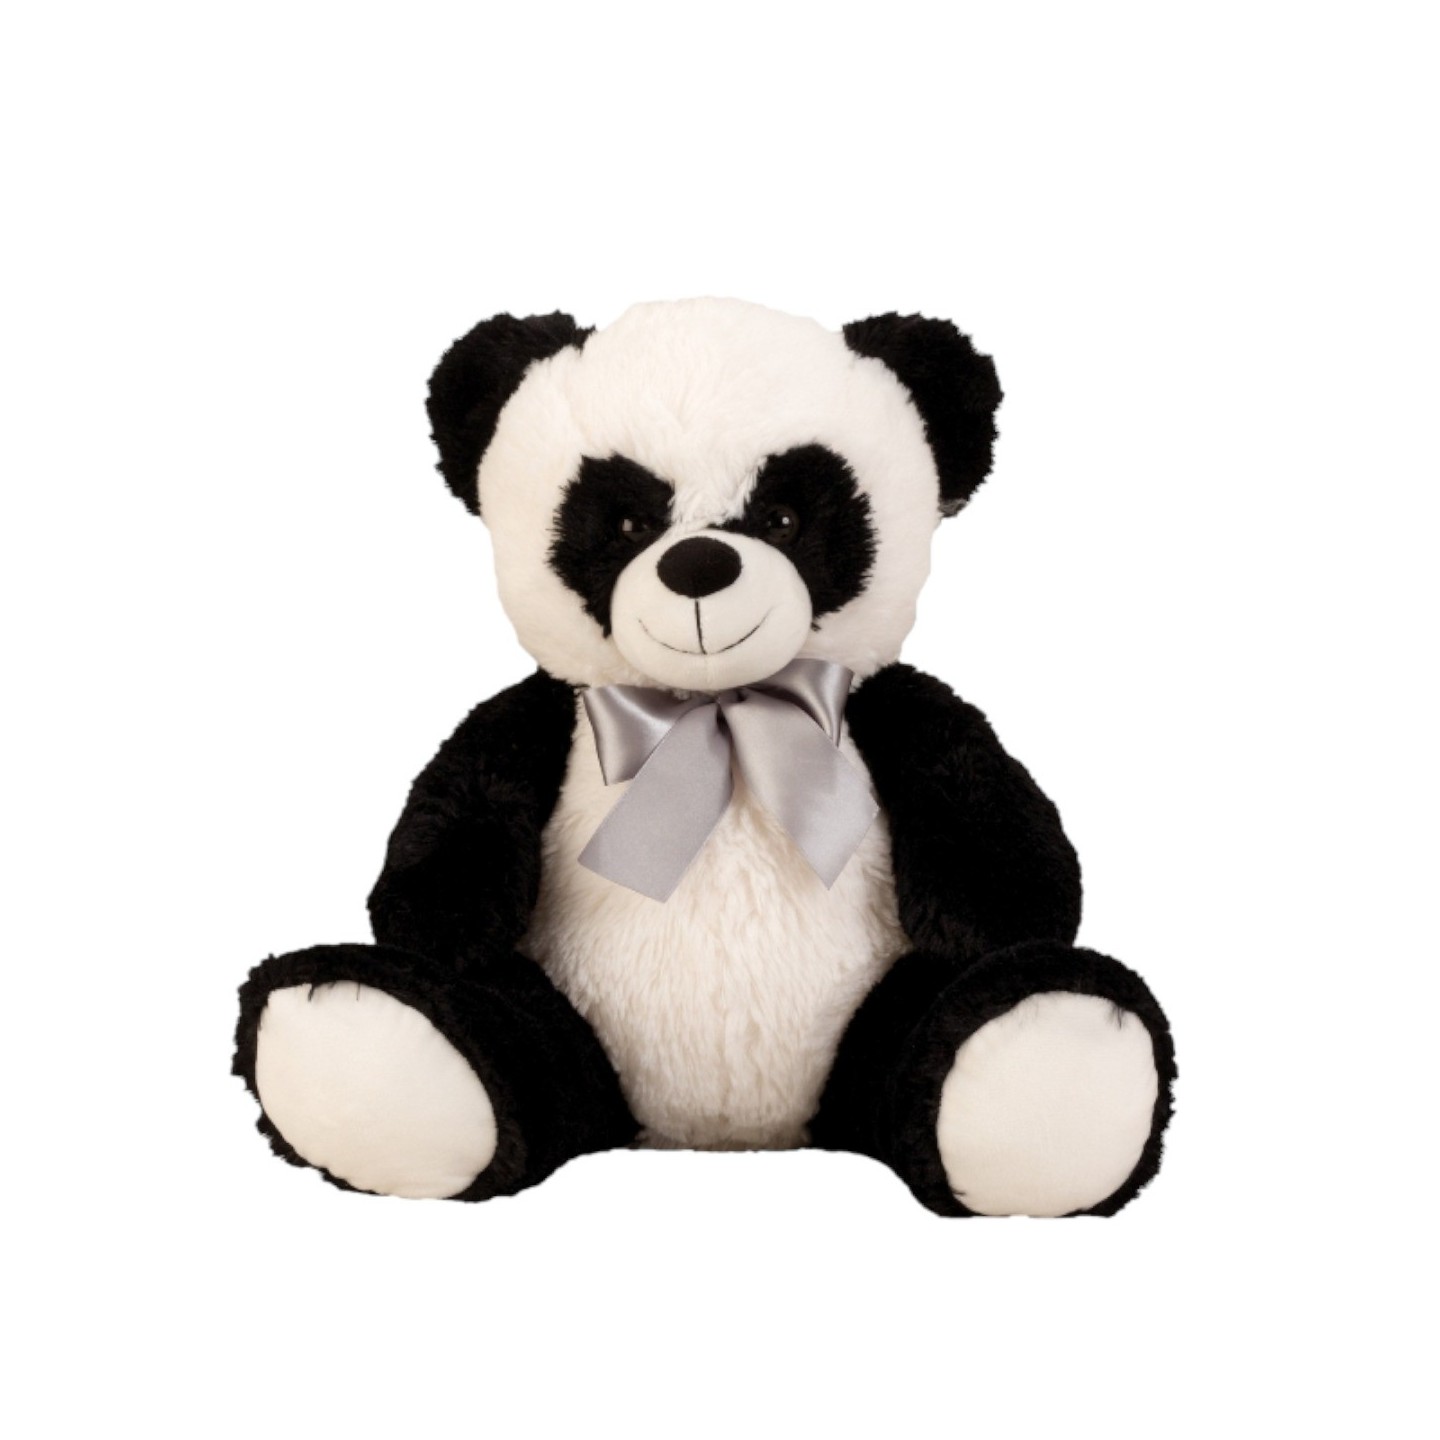 pluche knuffel panda beer knuffeldier teddybeer